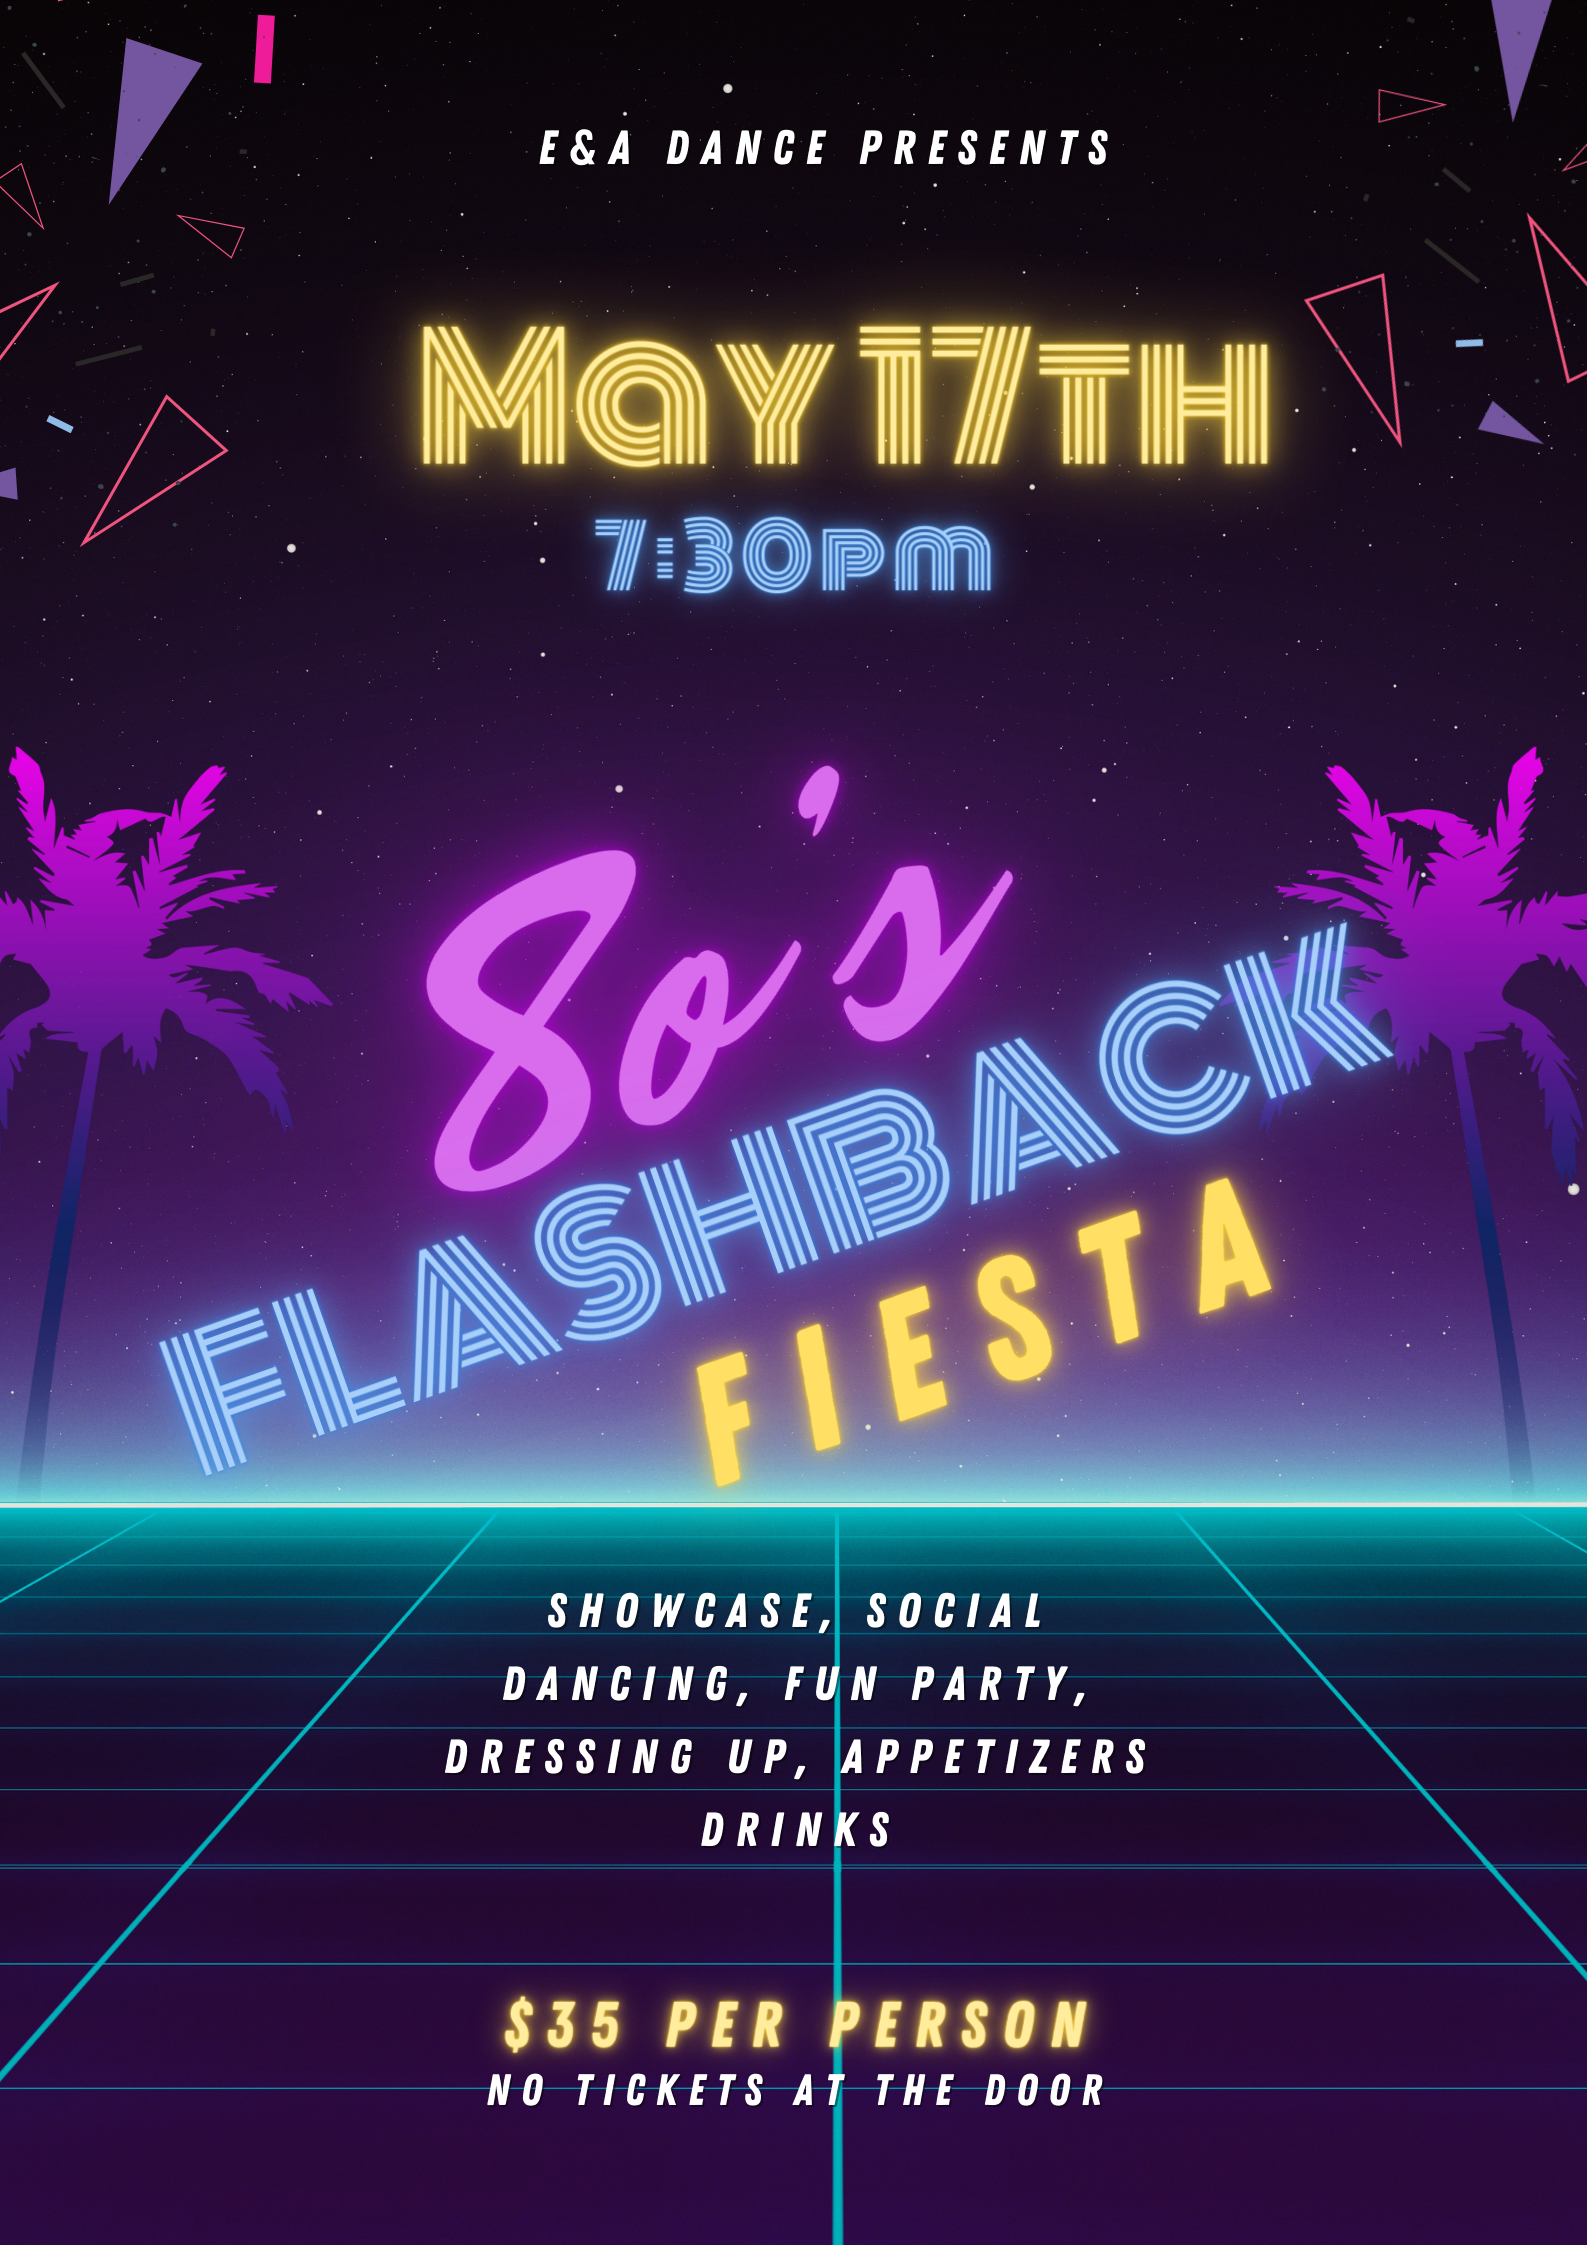 80's Flashback Fiesta Dance Event in Orlando, Florida